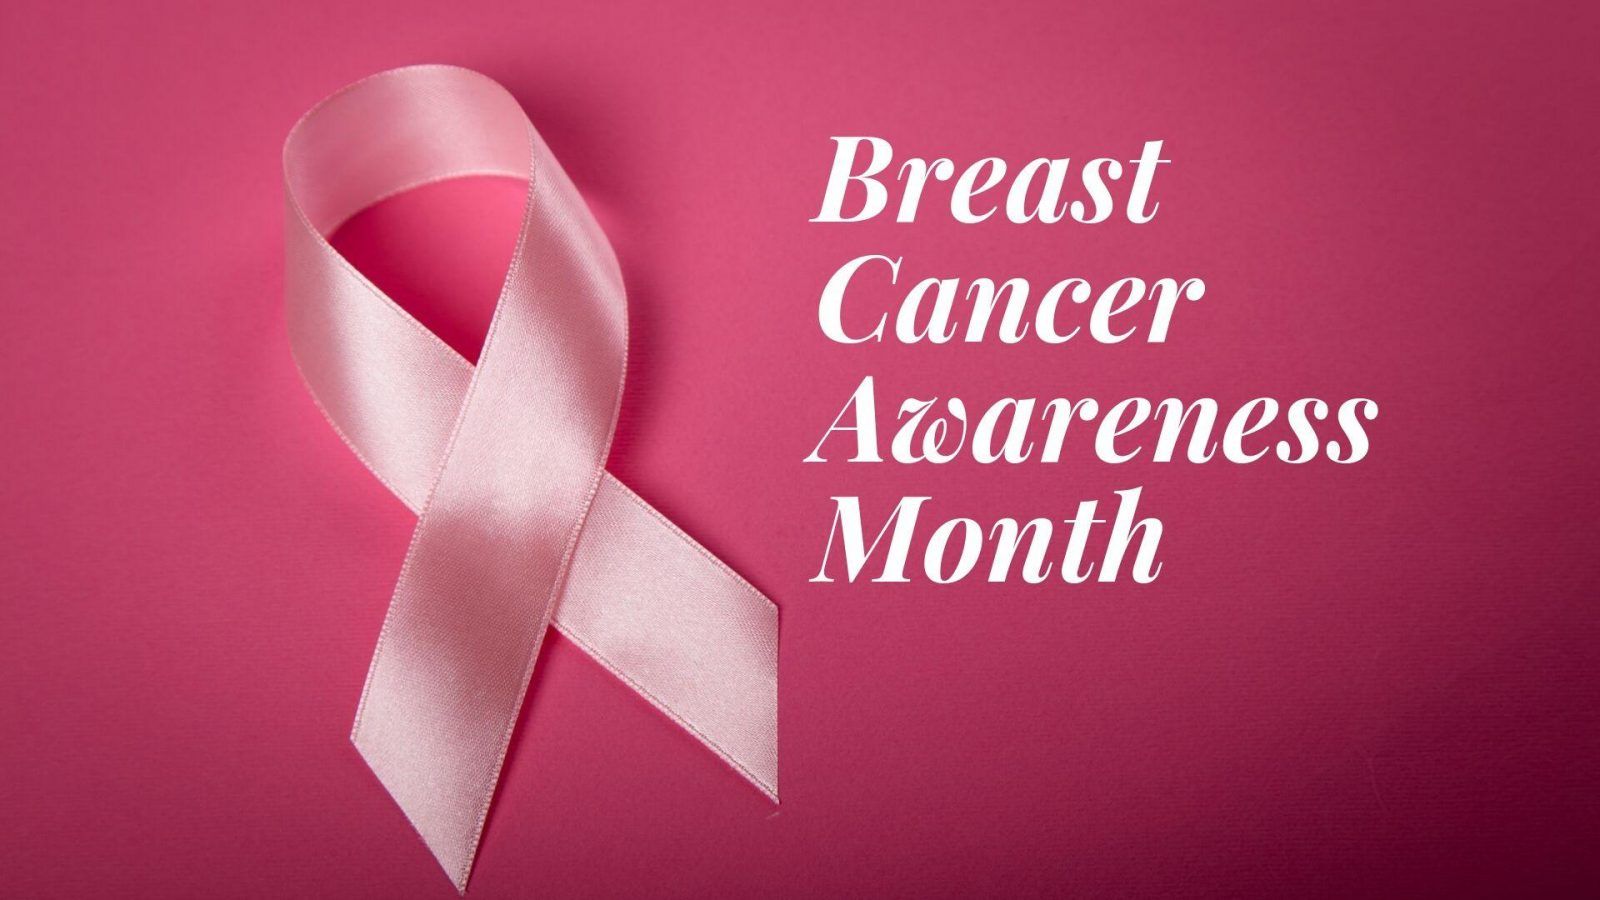 Ryan Health. Ryan Health Celebrates Breast Cancer Awareness Month